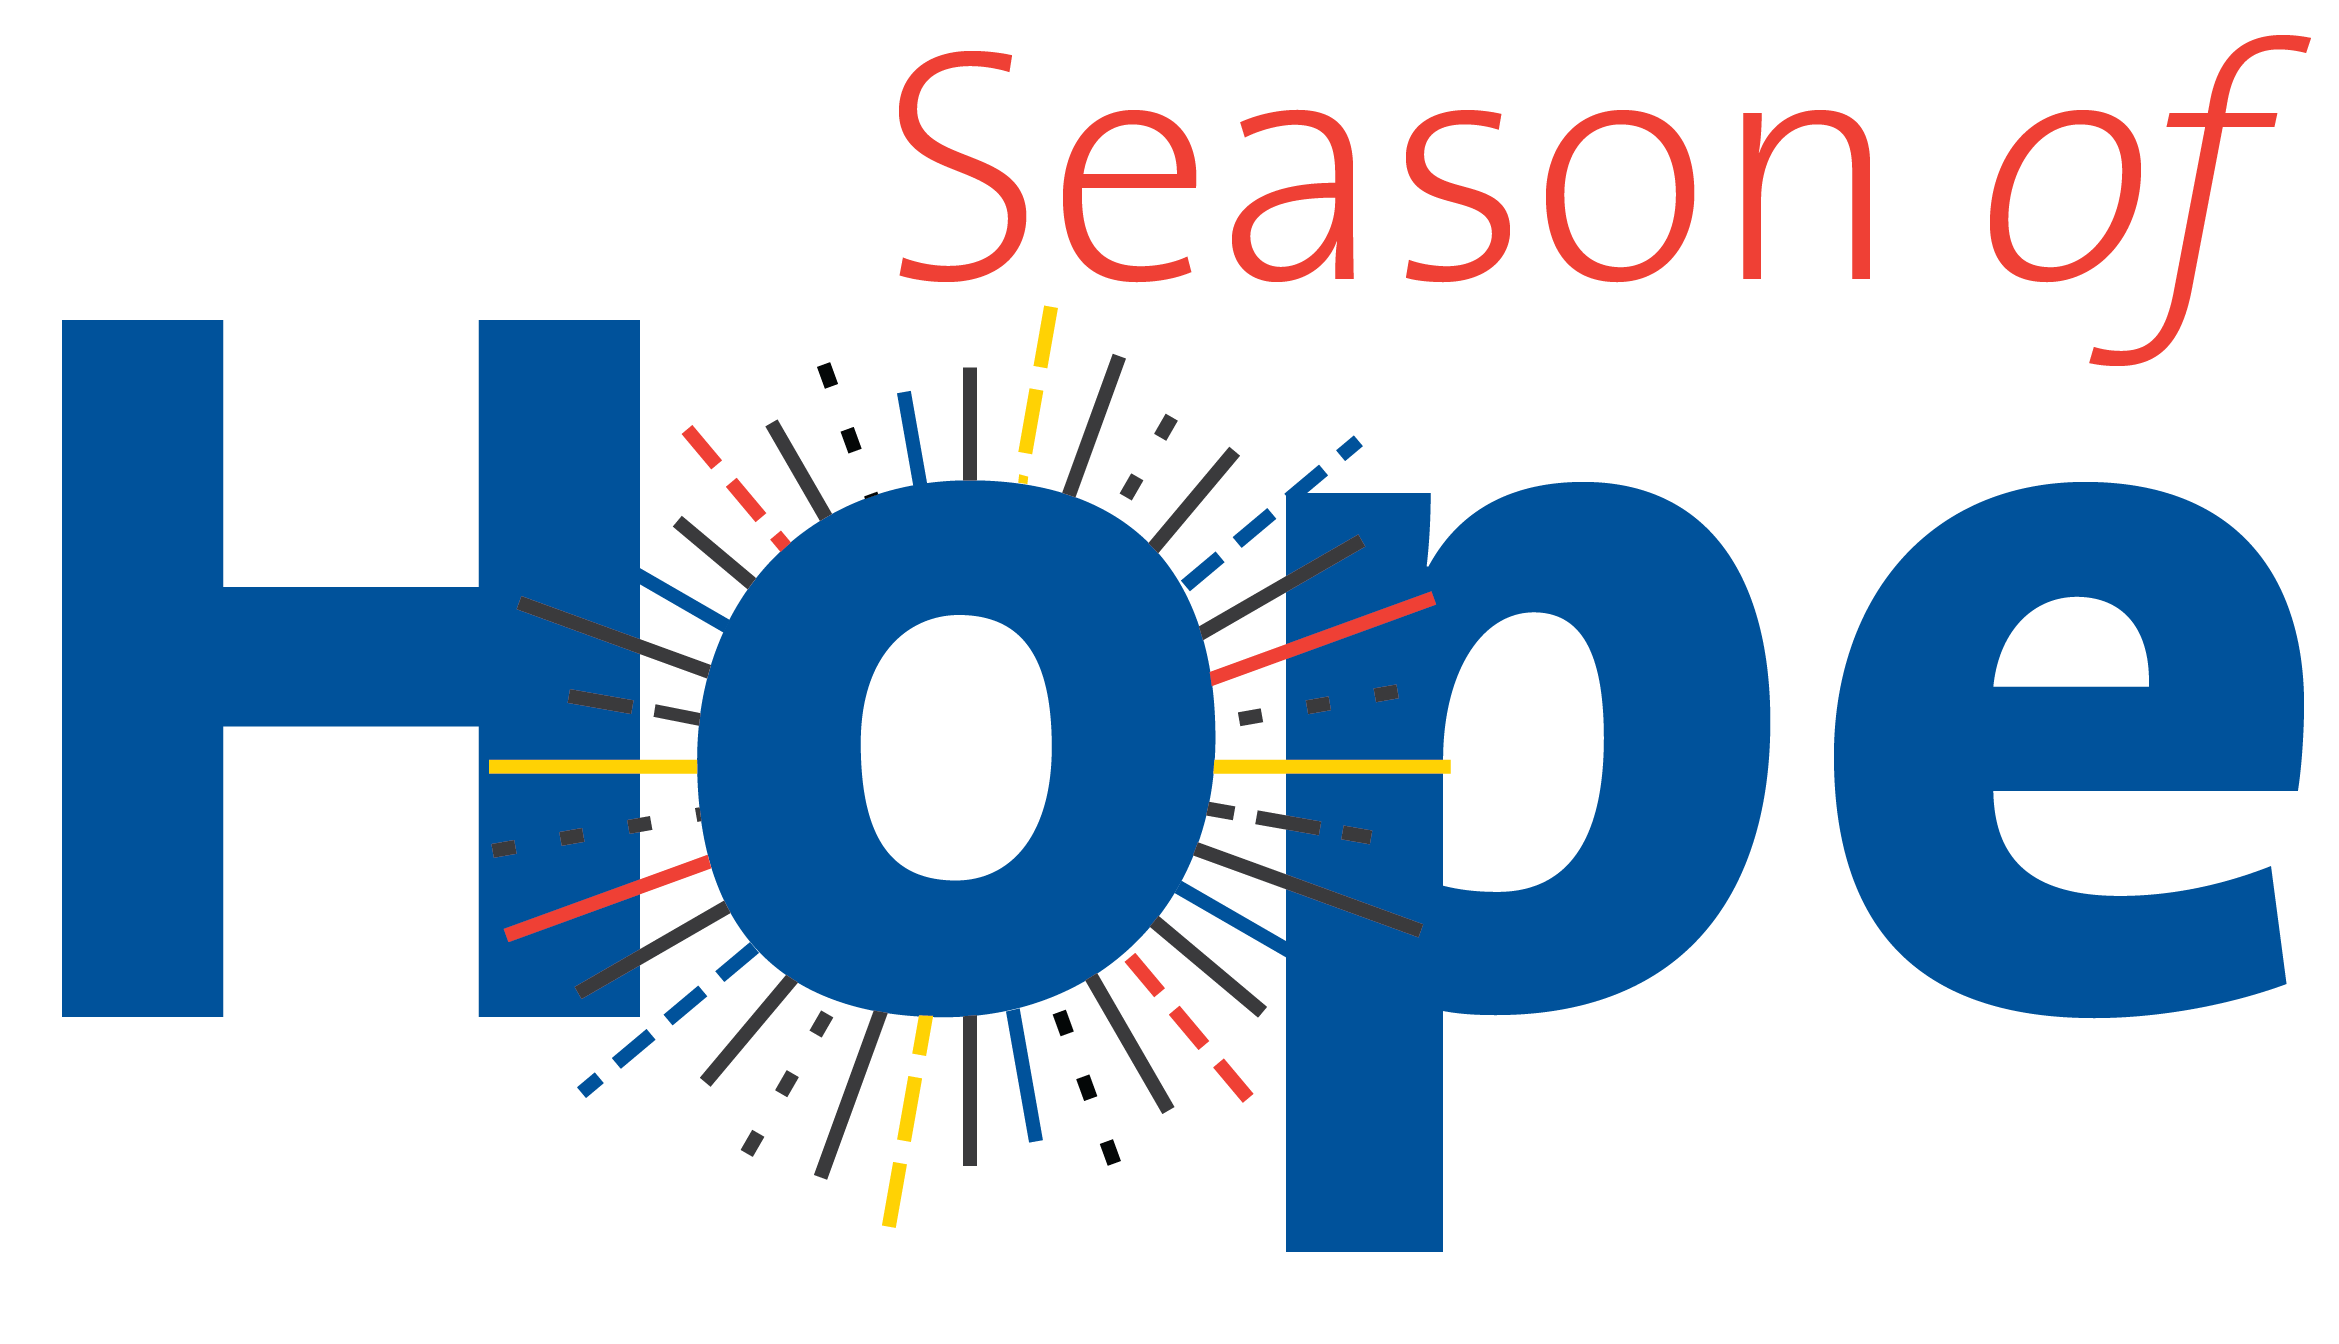 Logo stating "Season of Hope"